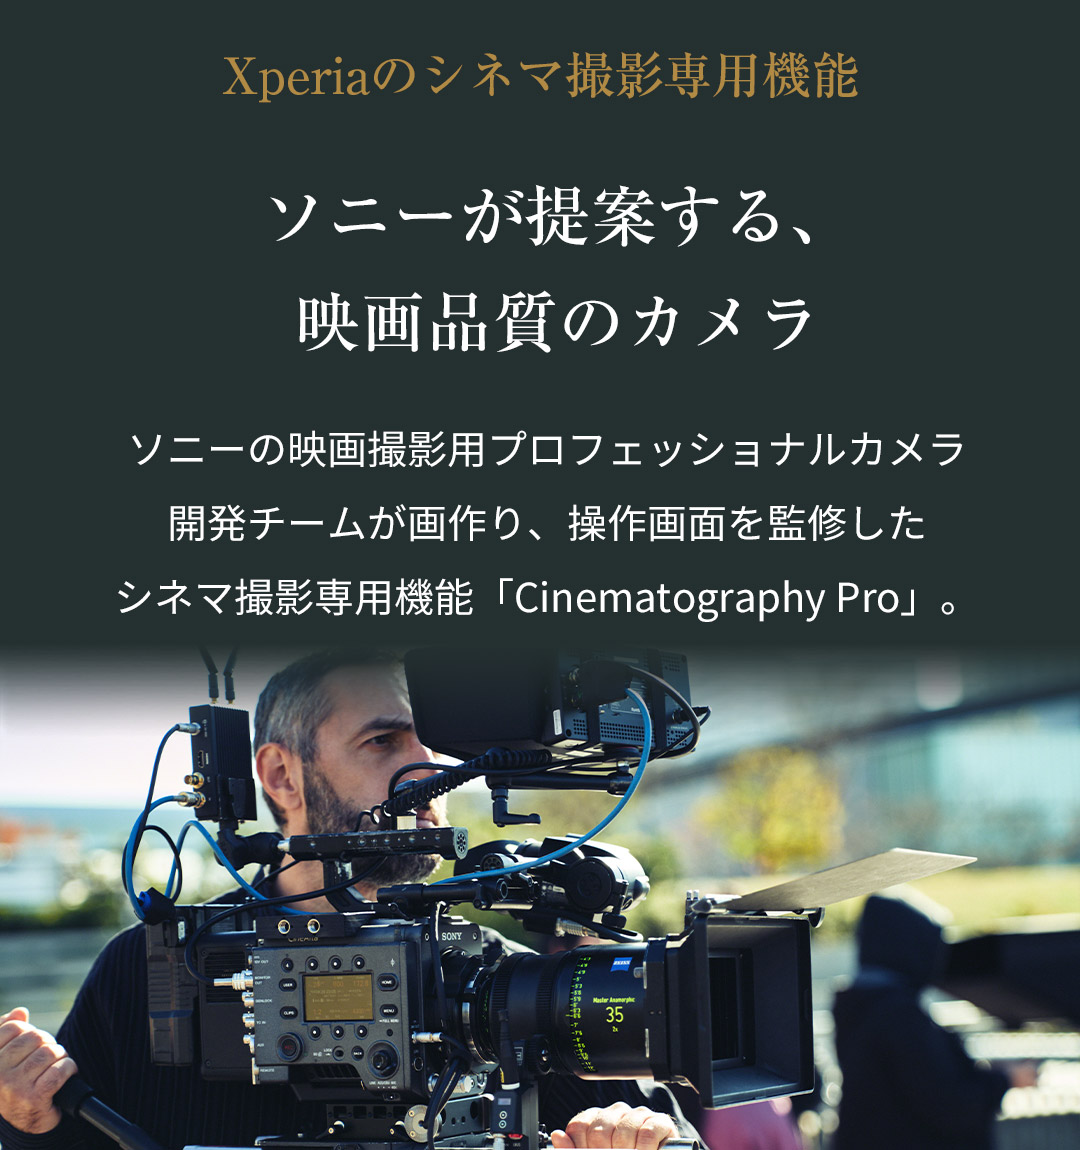 Xperiaのシネマ撮影専用機能 ソニーが提案する、映画品質のカメラ ソニーの映画撮影用プロフェッショナルカメラ開発チームが画作り、操作画面を監修したシネマ撮影専用機能「Cinematography Pro」。